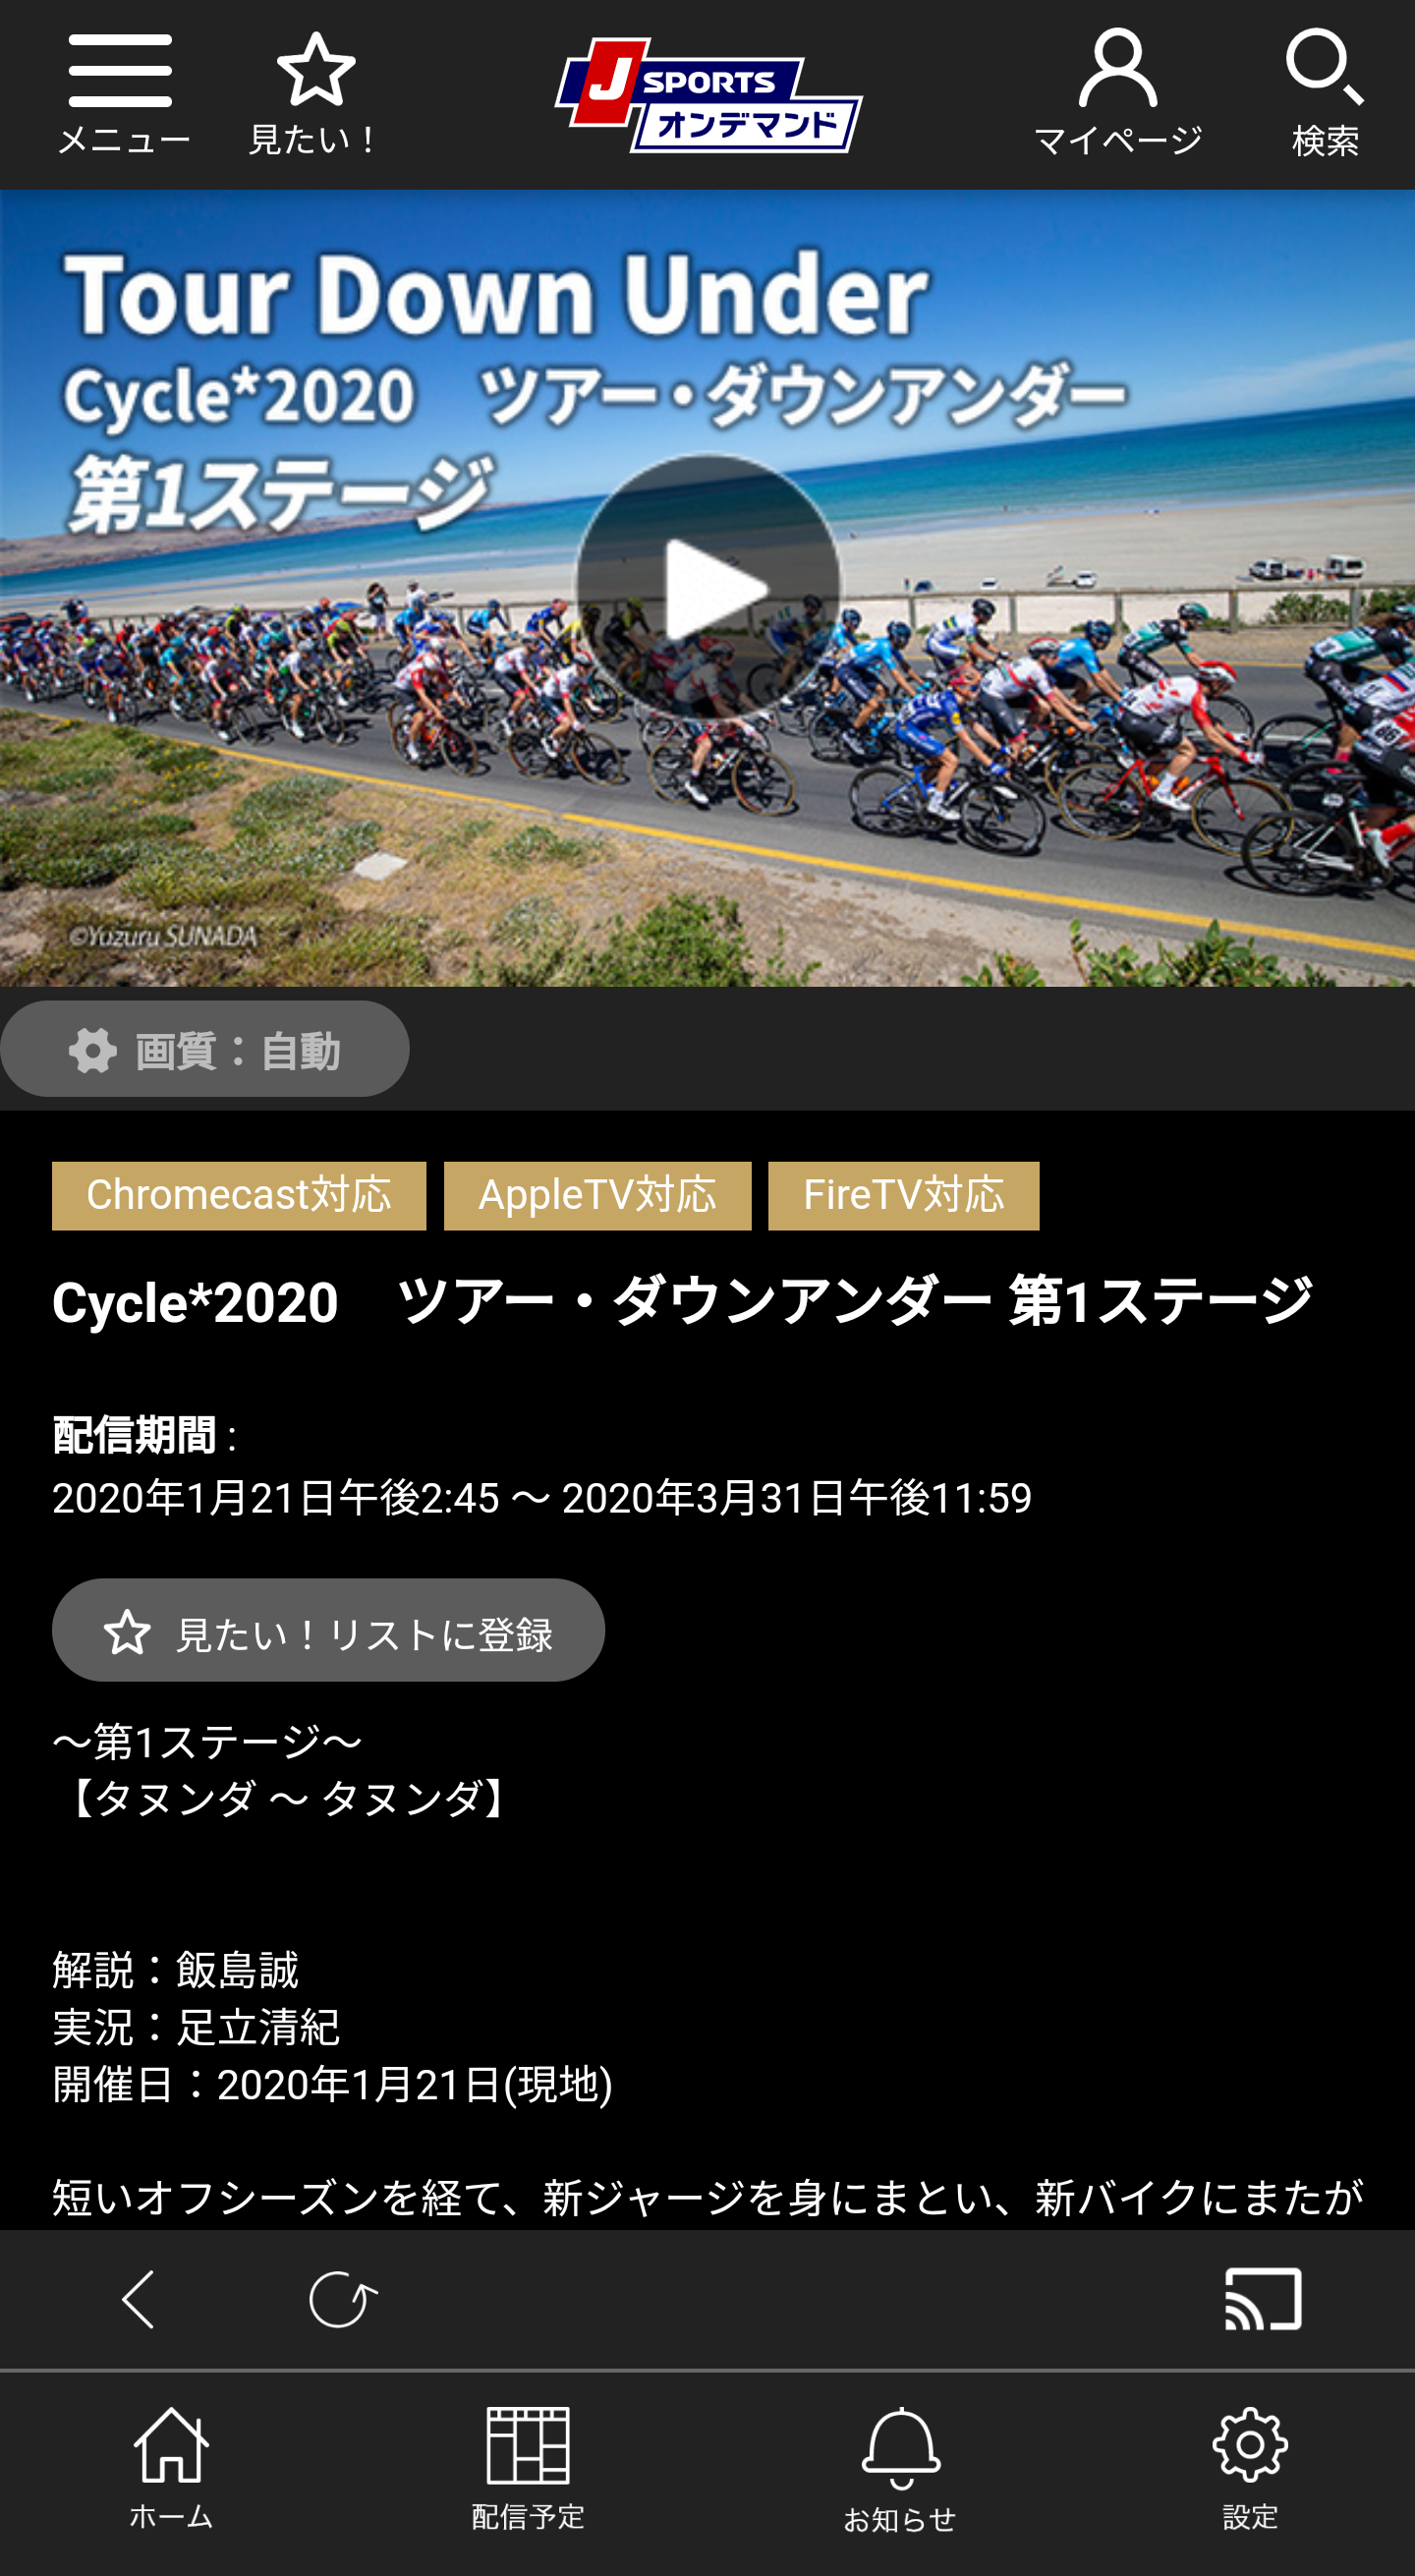 Android application J SPORTSオンデマンド screenshort